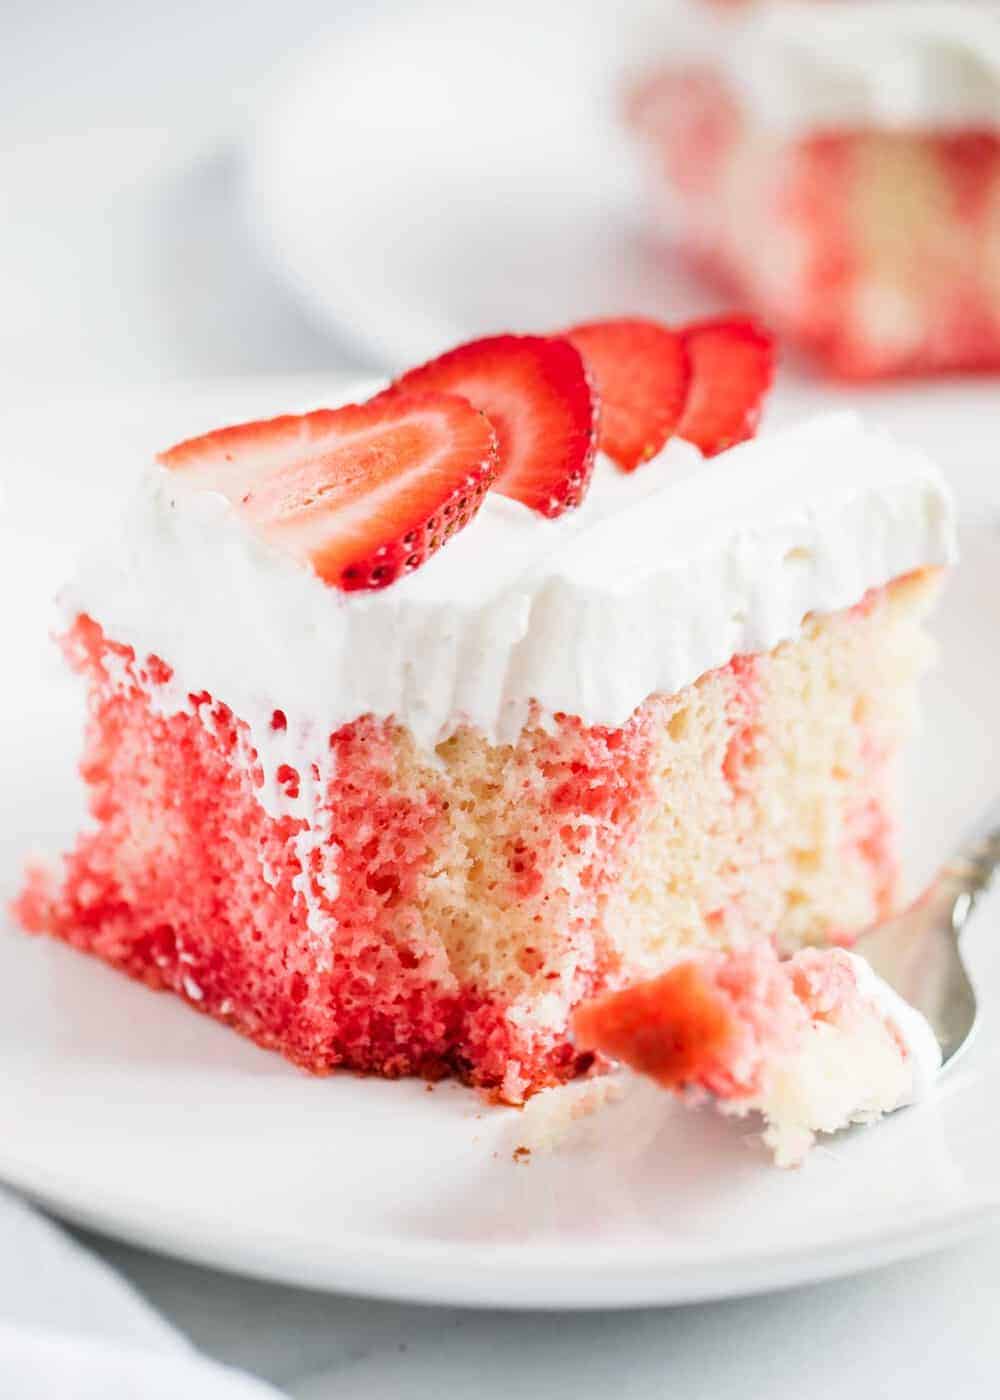 Jello poke cake with whipped cream and strawberries.